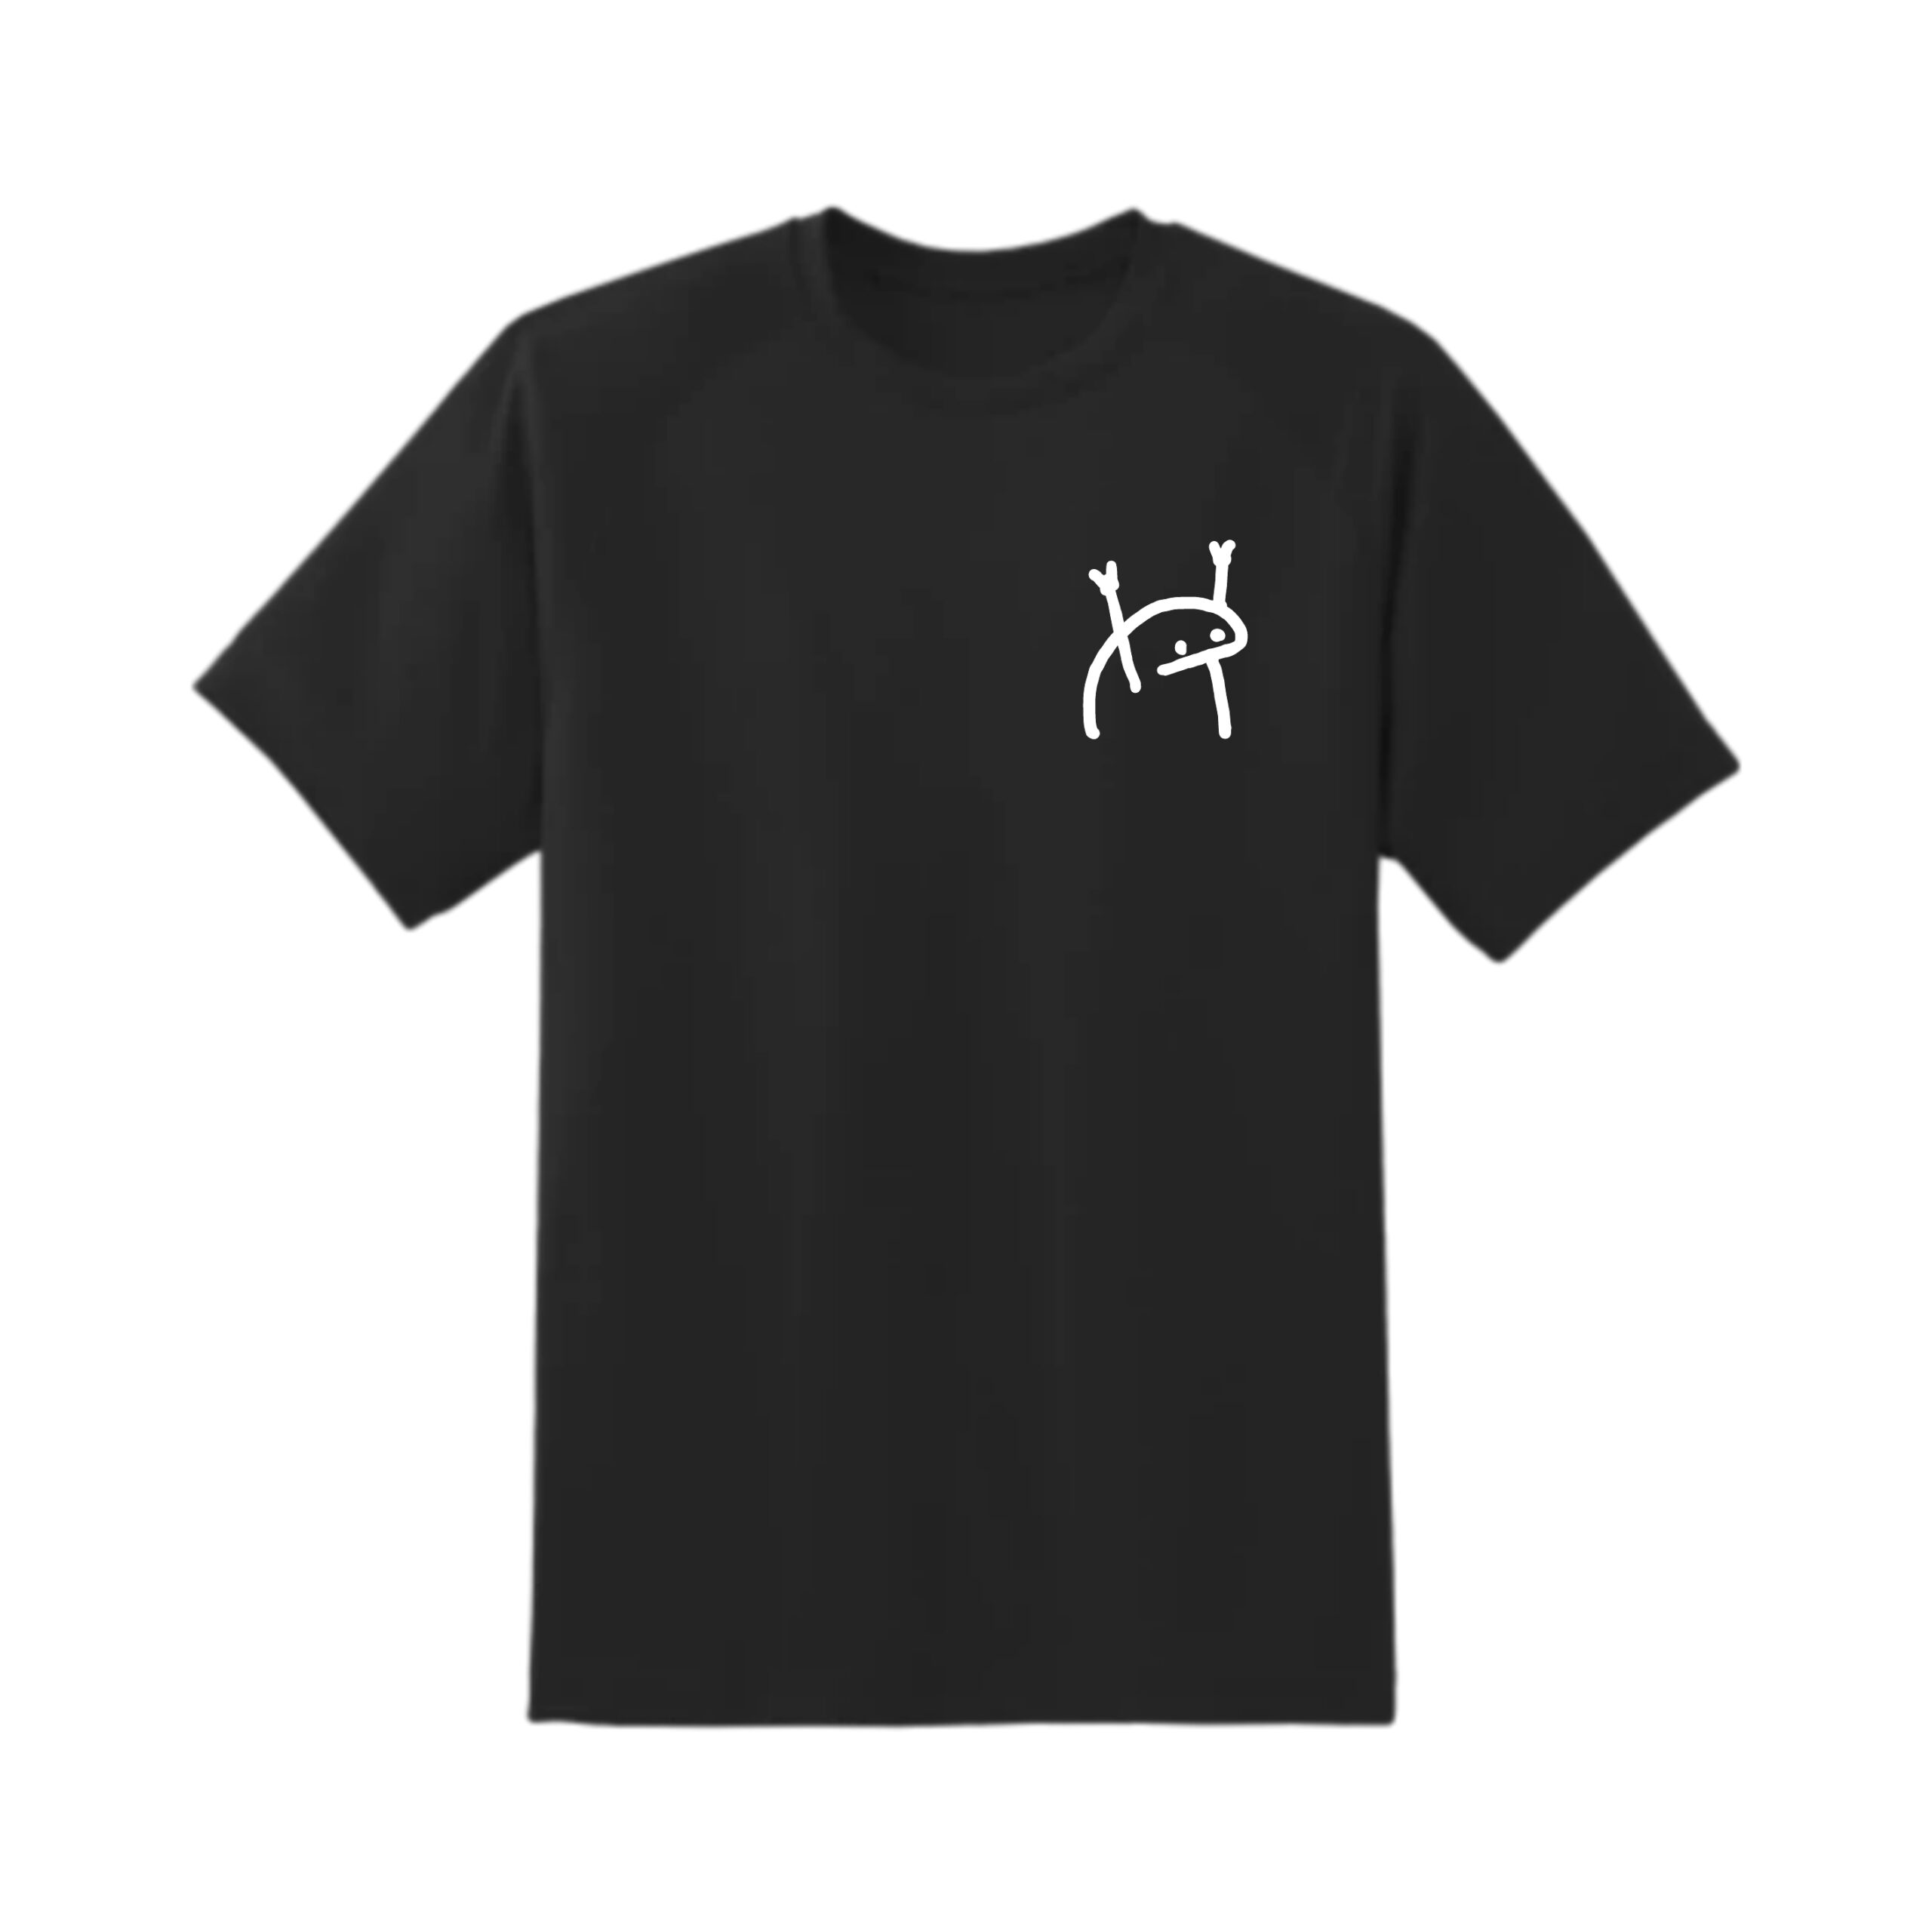 Emoji black oversize t shirt - tapanddraw.com